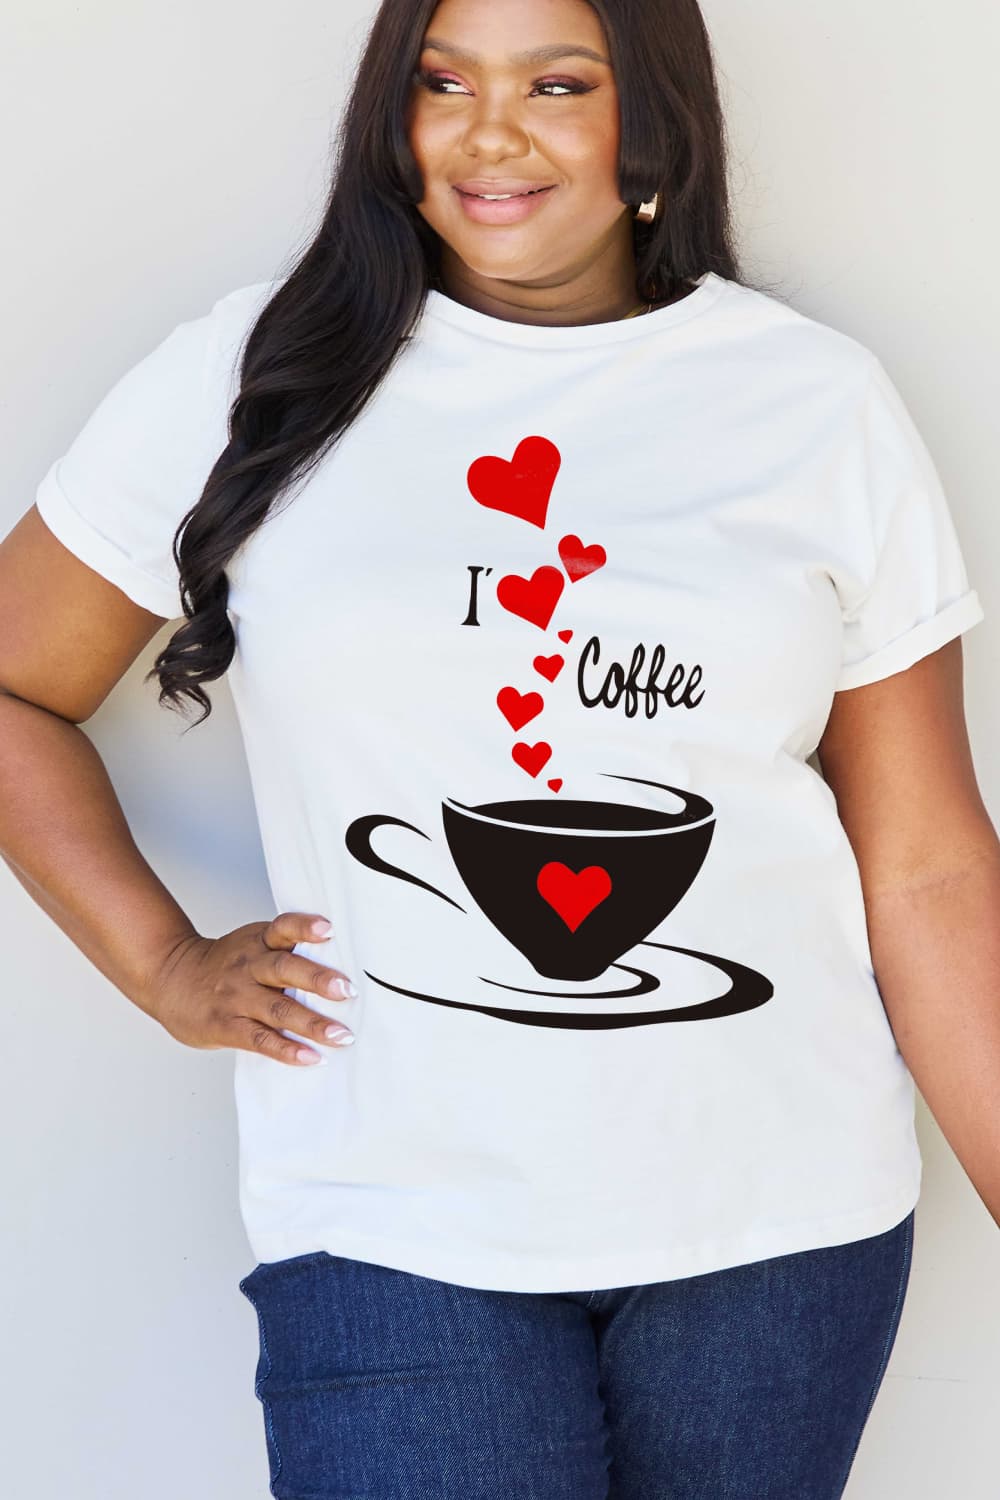 Simply Love I LOVE COFFEE Graphic Cotton Tee